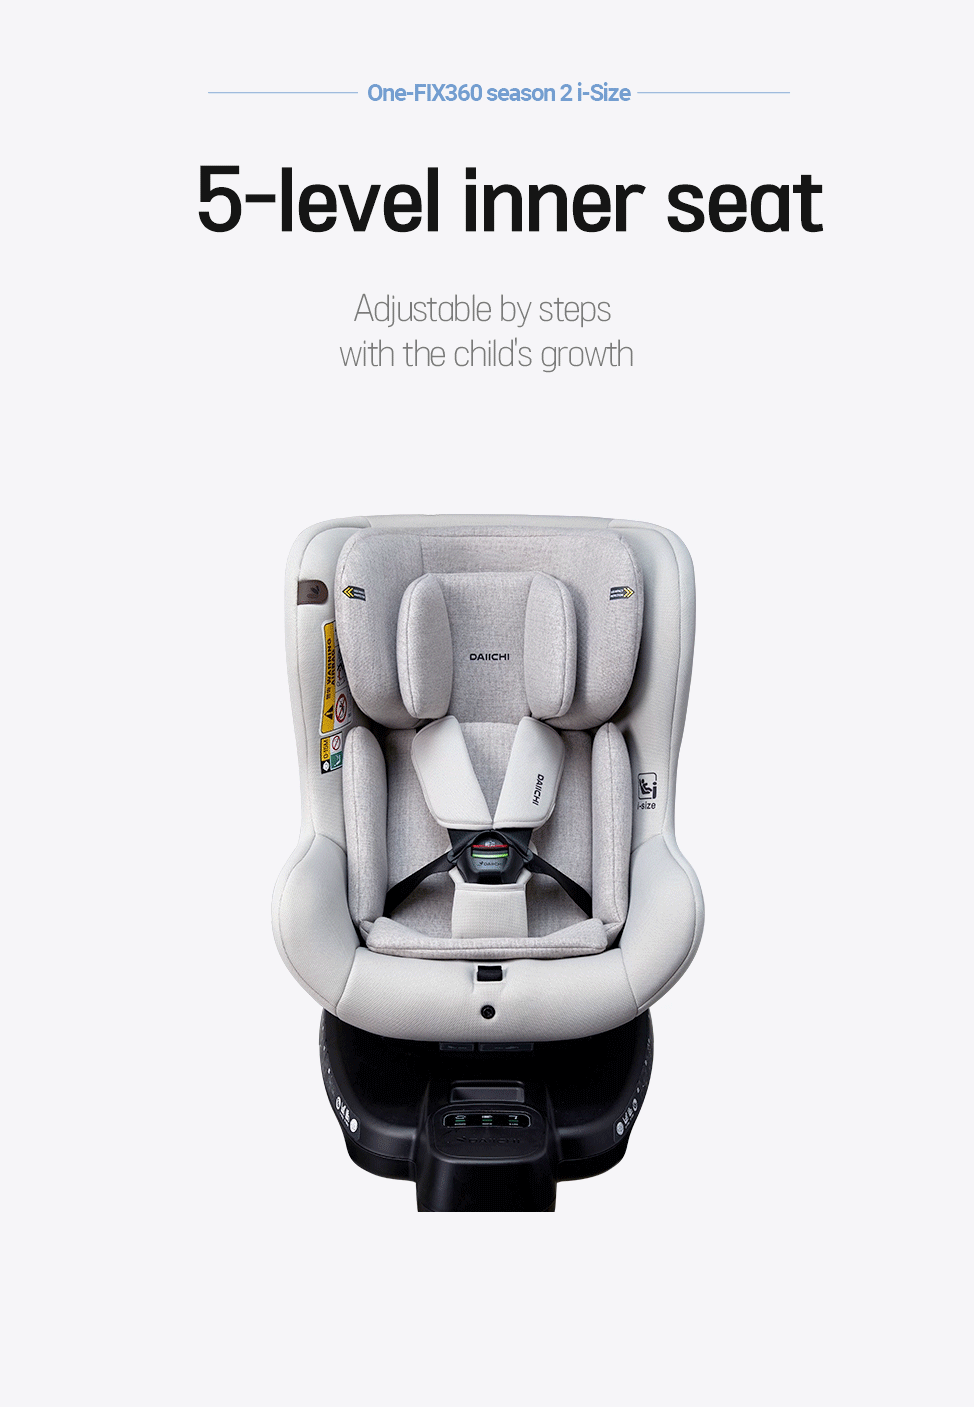 Daiichi 5-level inner seat one-fix i-size